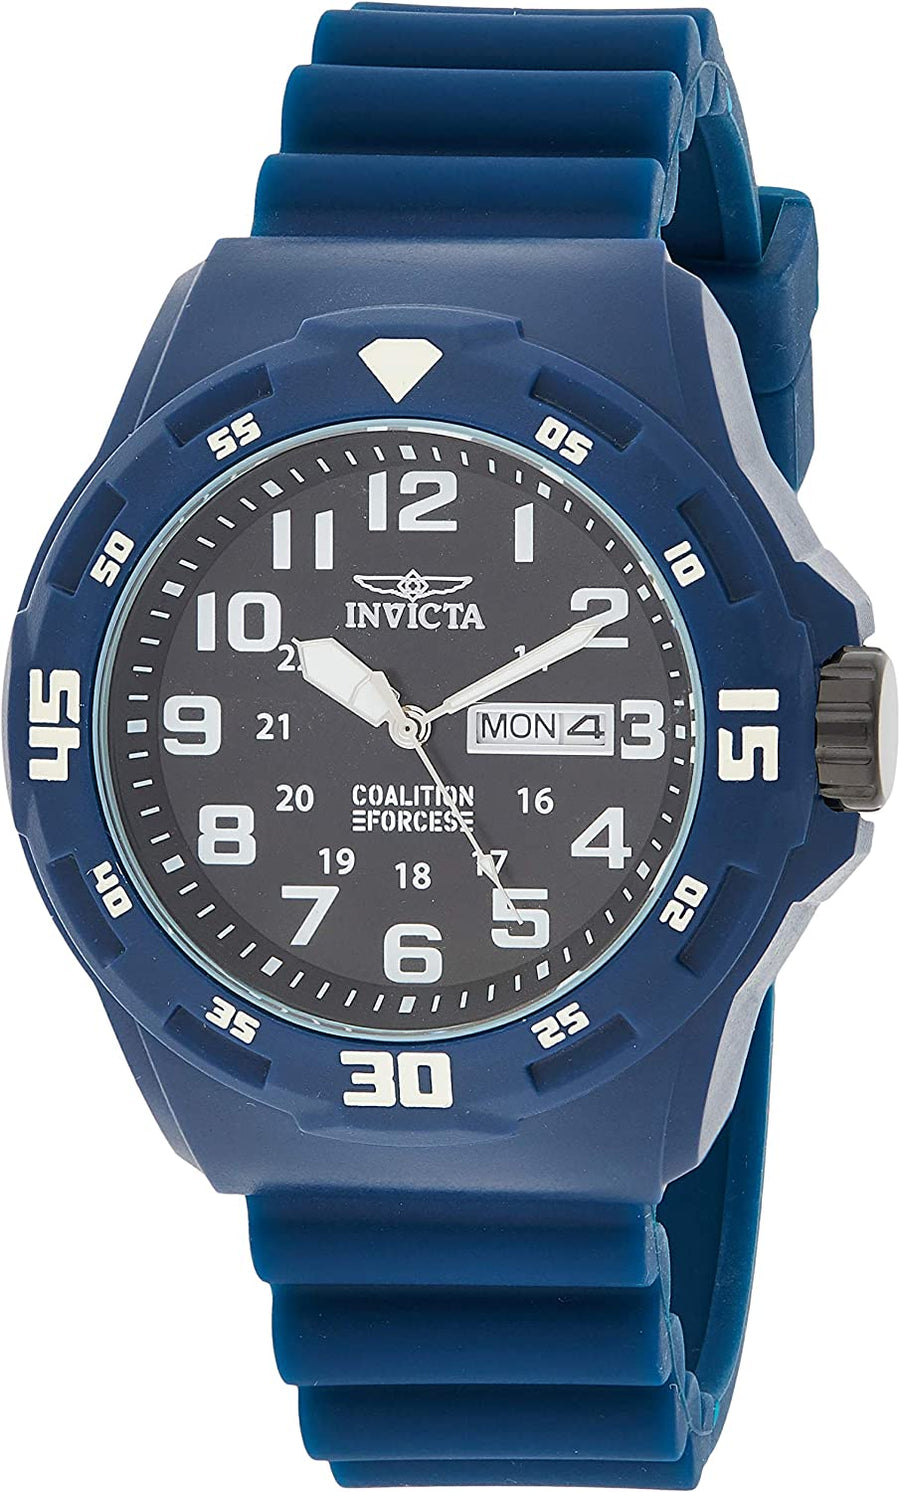 Invicta Men's 25324 Coalition Forces Analog Display Quartz Blue Watch - 3alababak